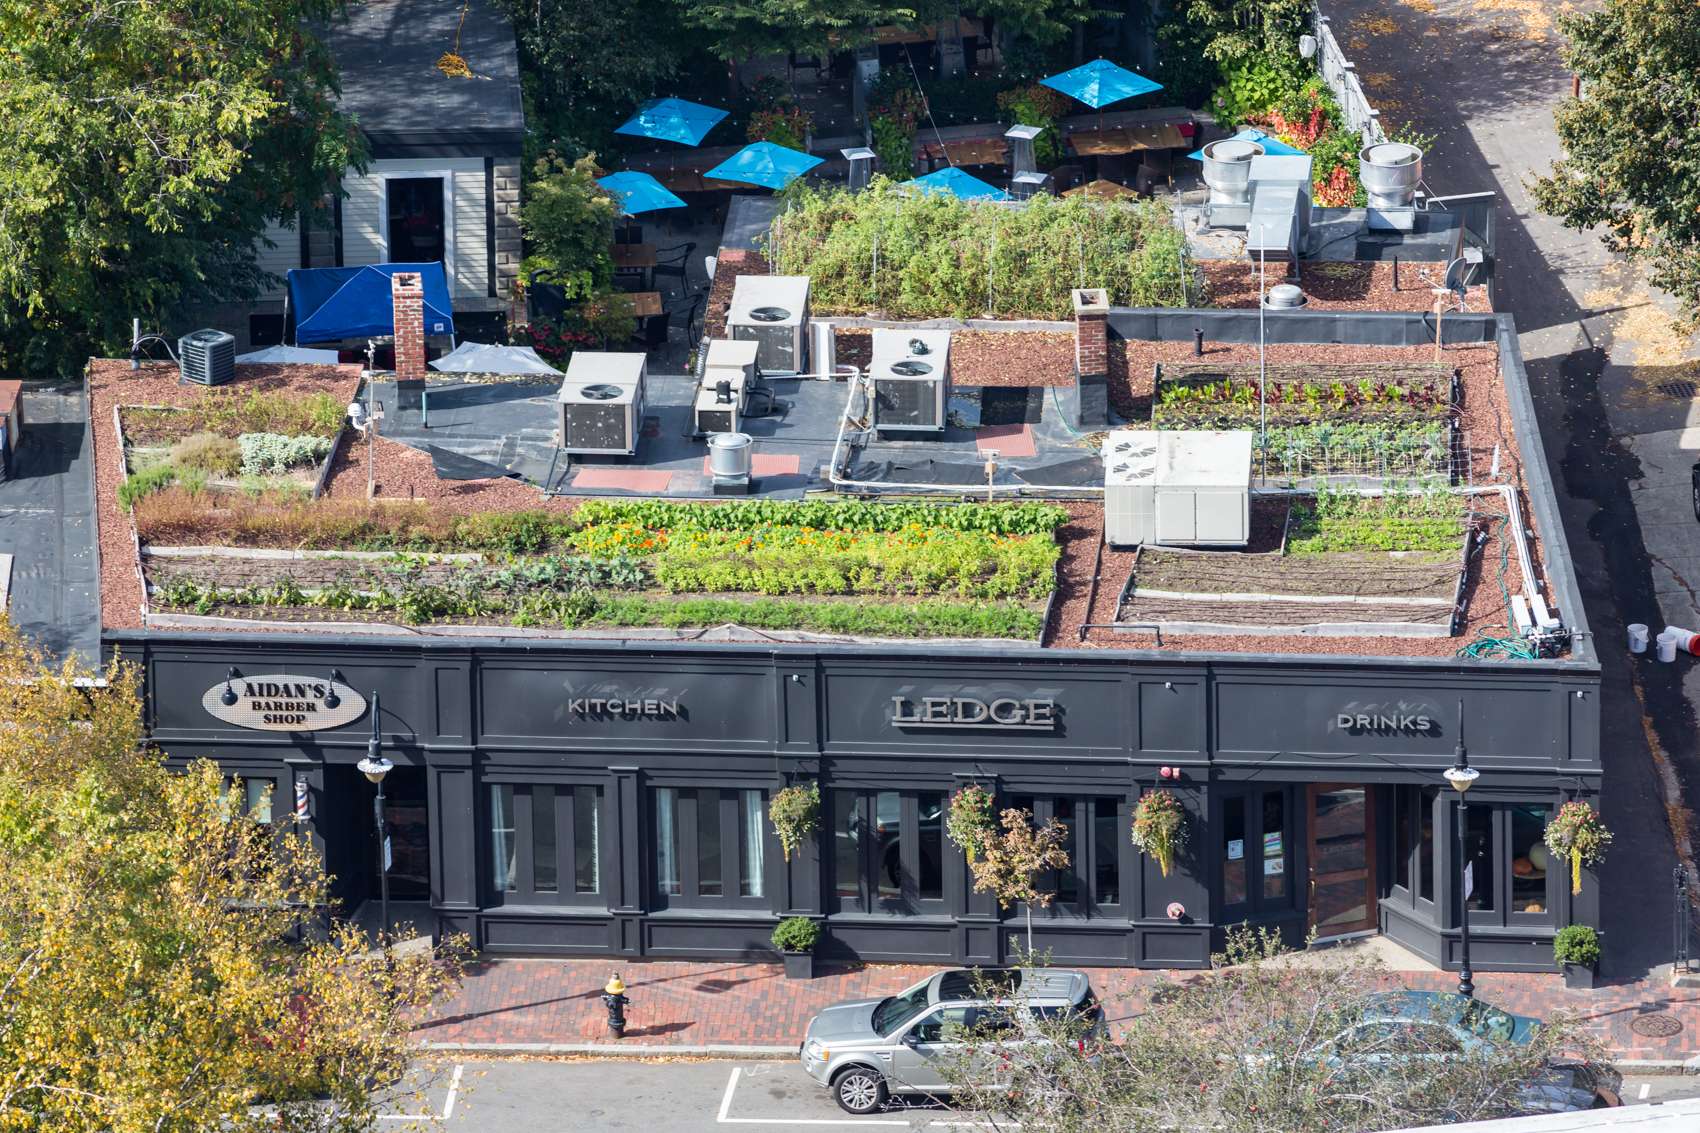 Ledge Kitchen & Drinks - Dorchester Restaurant with  rooftop garden now closed